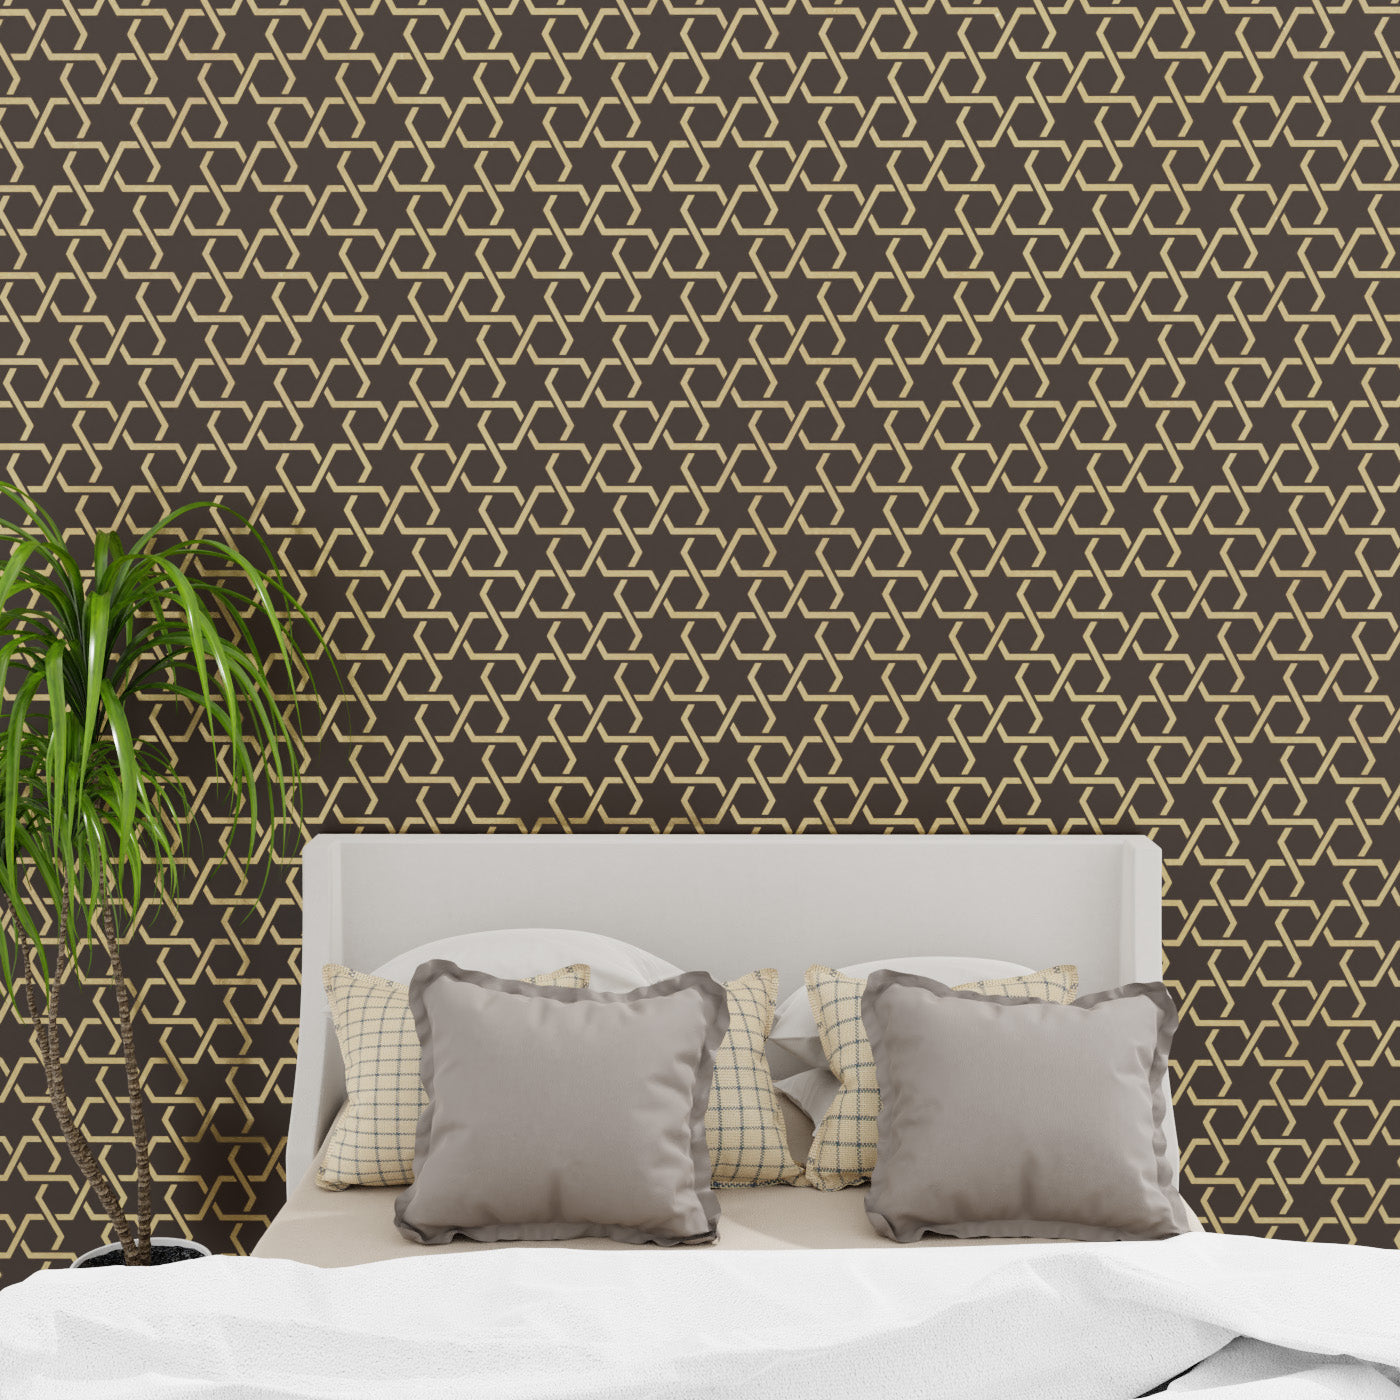 CraftStar Moroccan Star Lattice Stencil - Geometric Repreating Pattern on Bedroom Wall